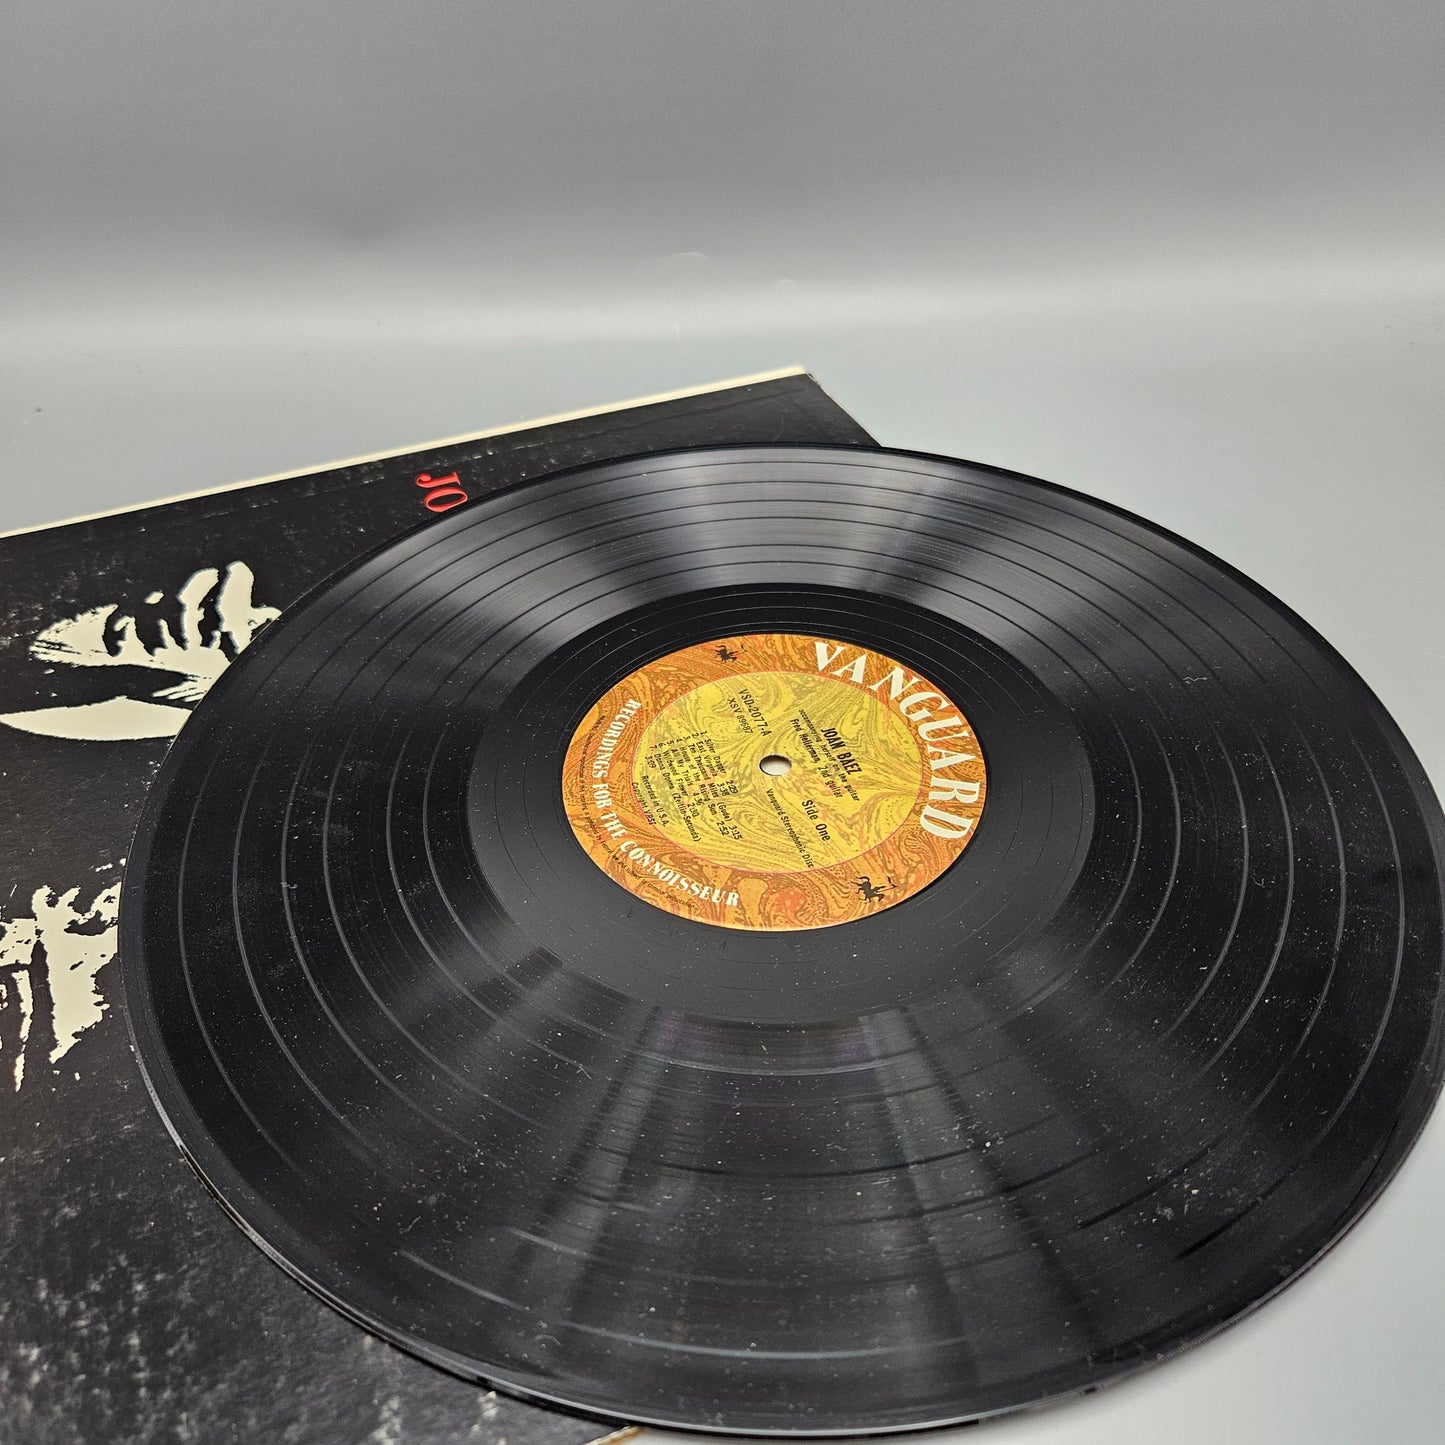 1969 Joan Baez Self Titled LP Record